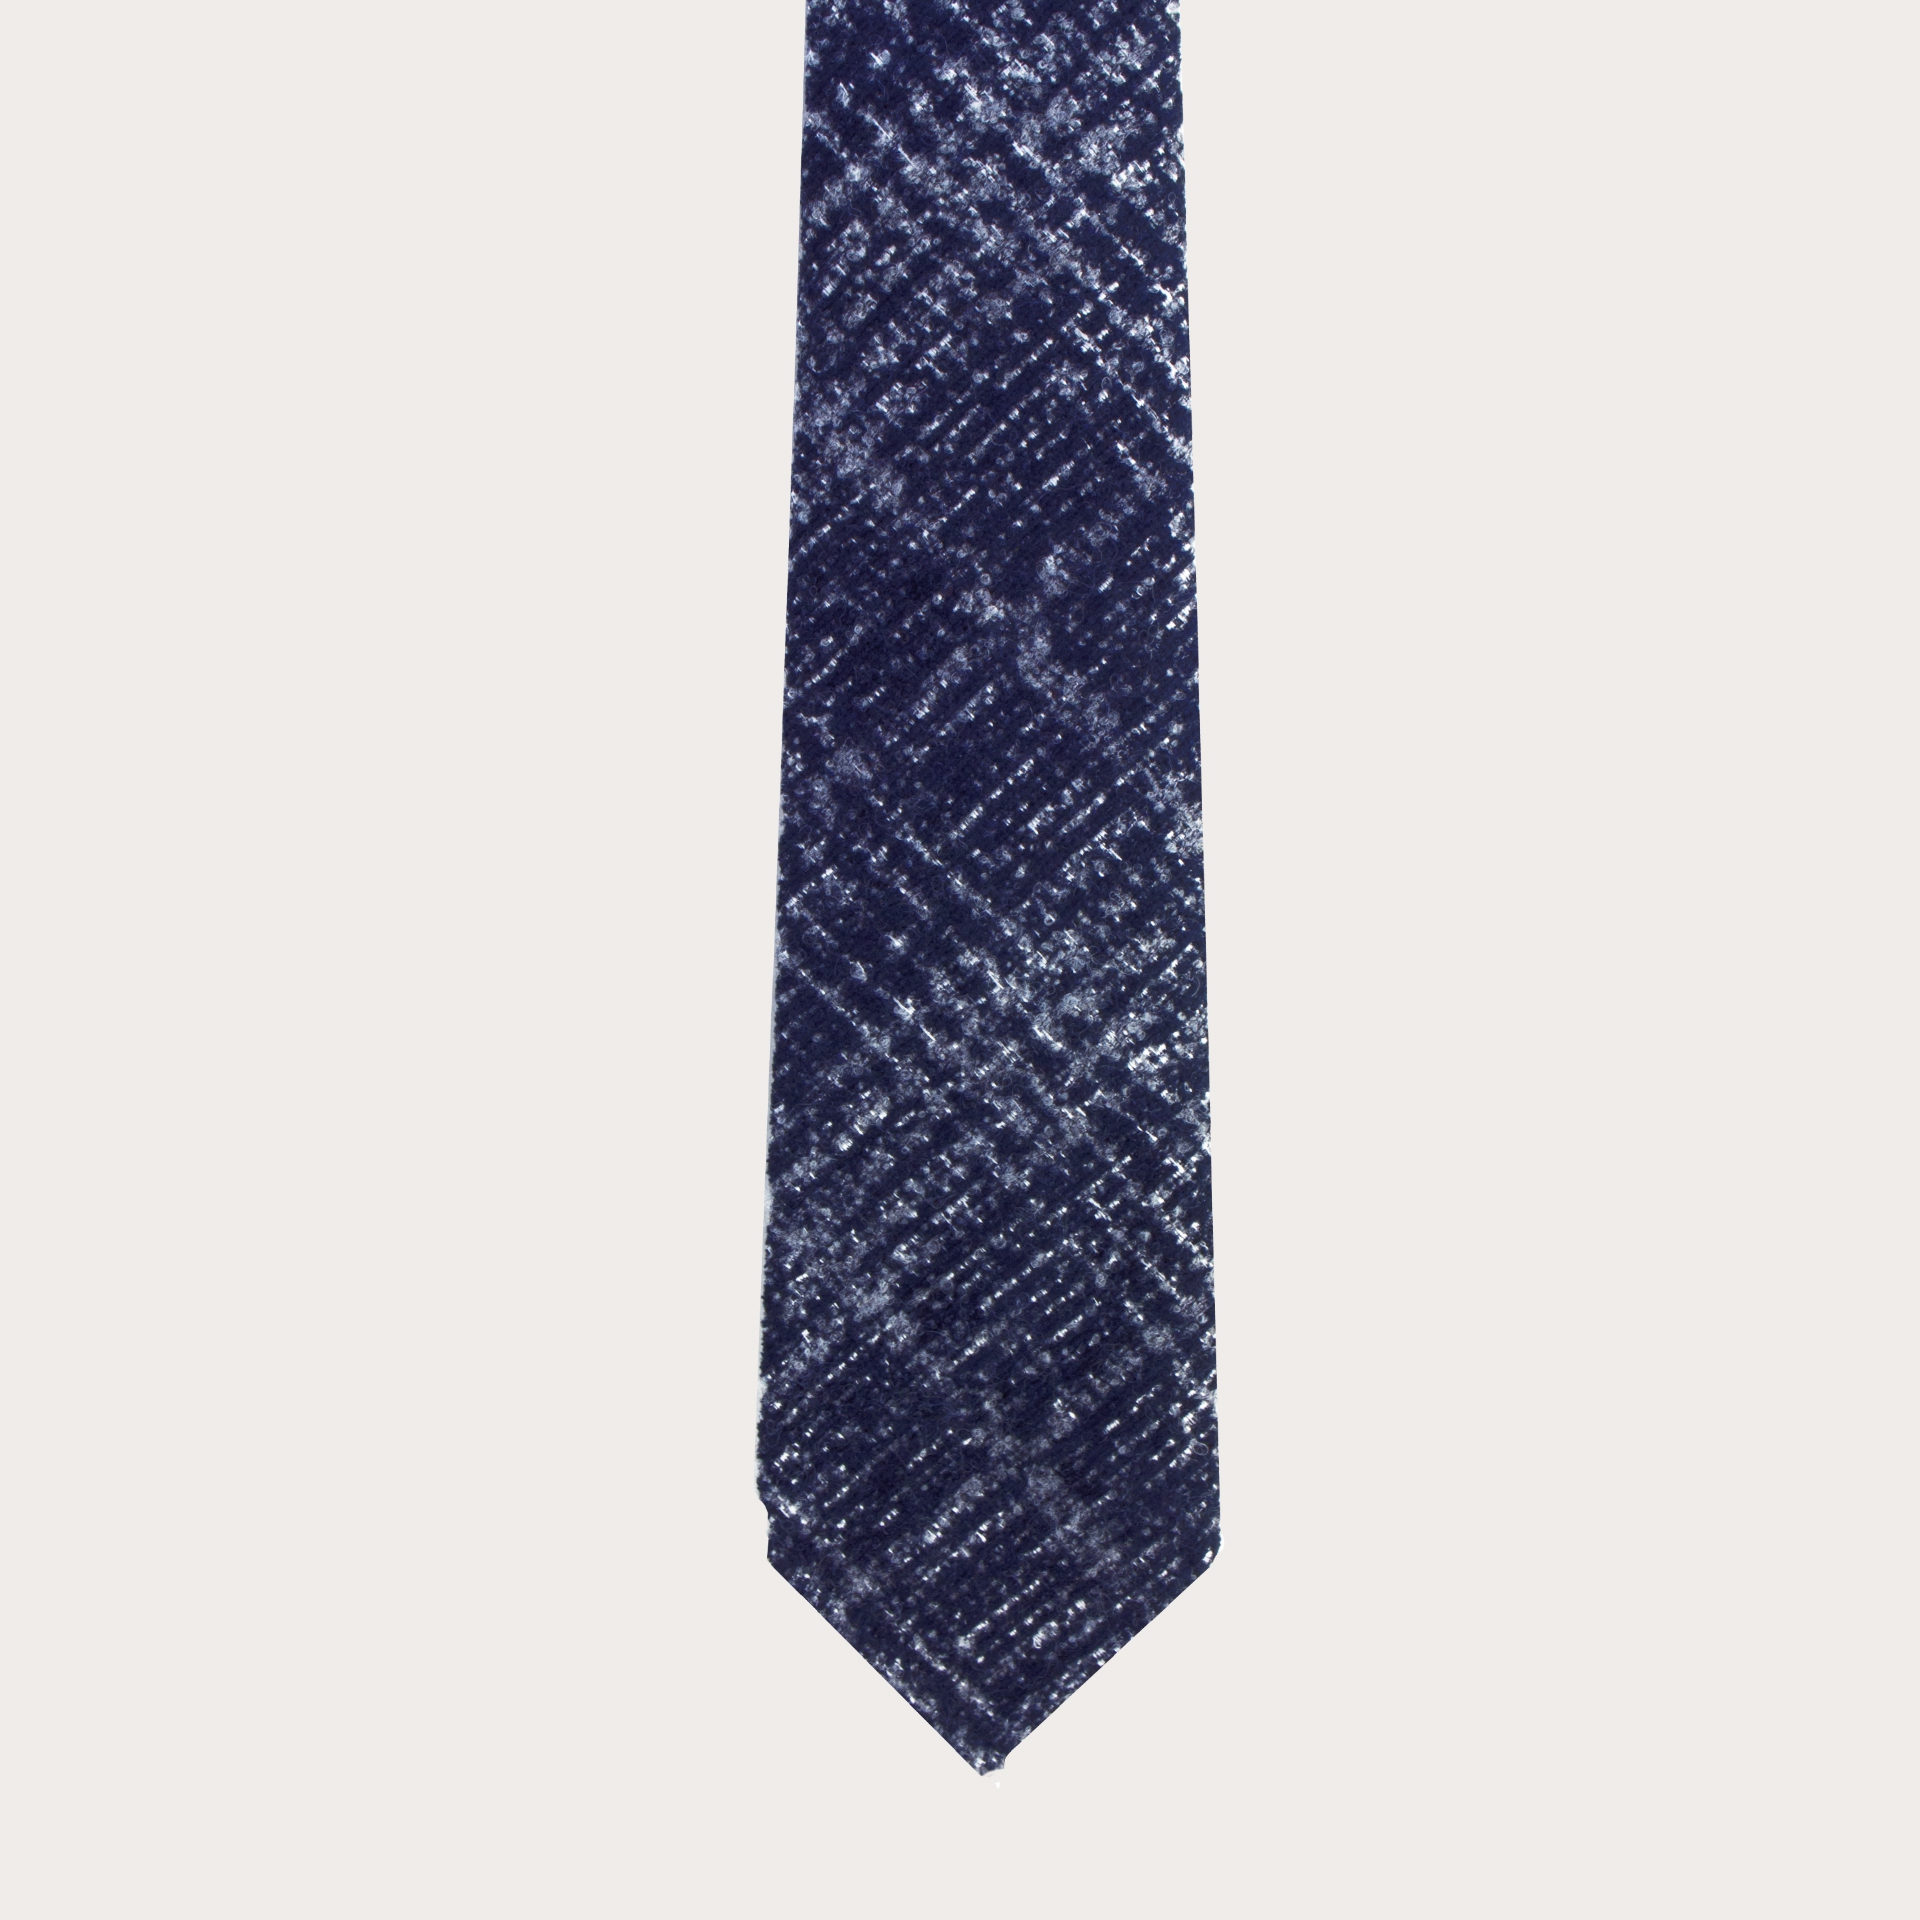 Unlined necktie in wool and silk, blue and light blue tartan